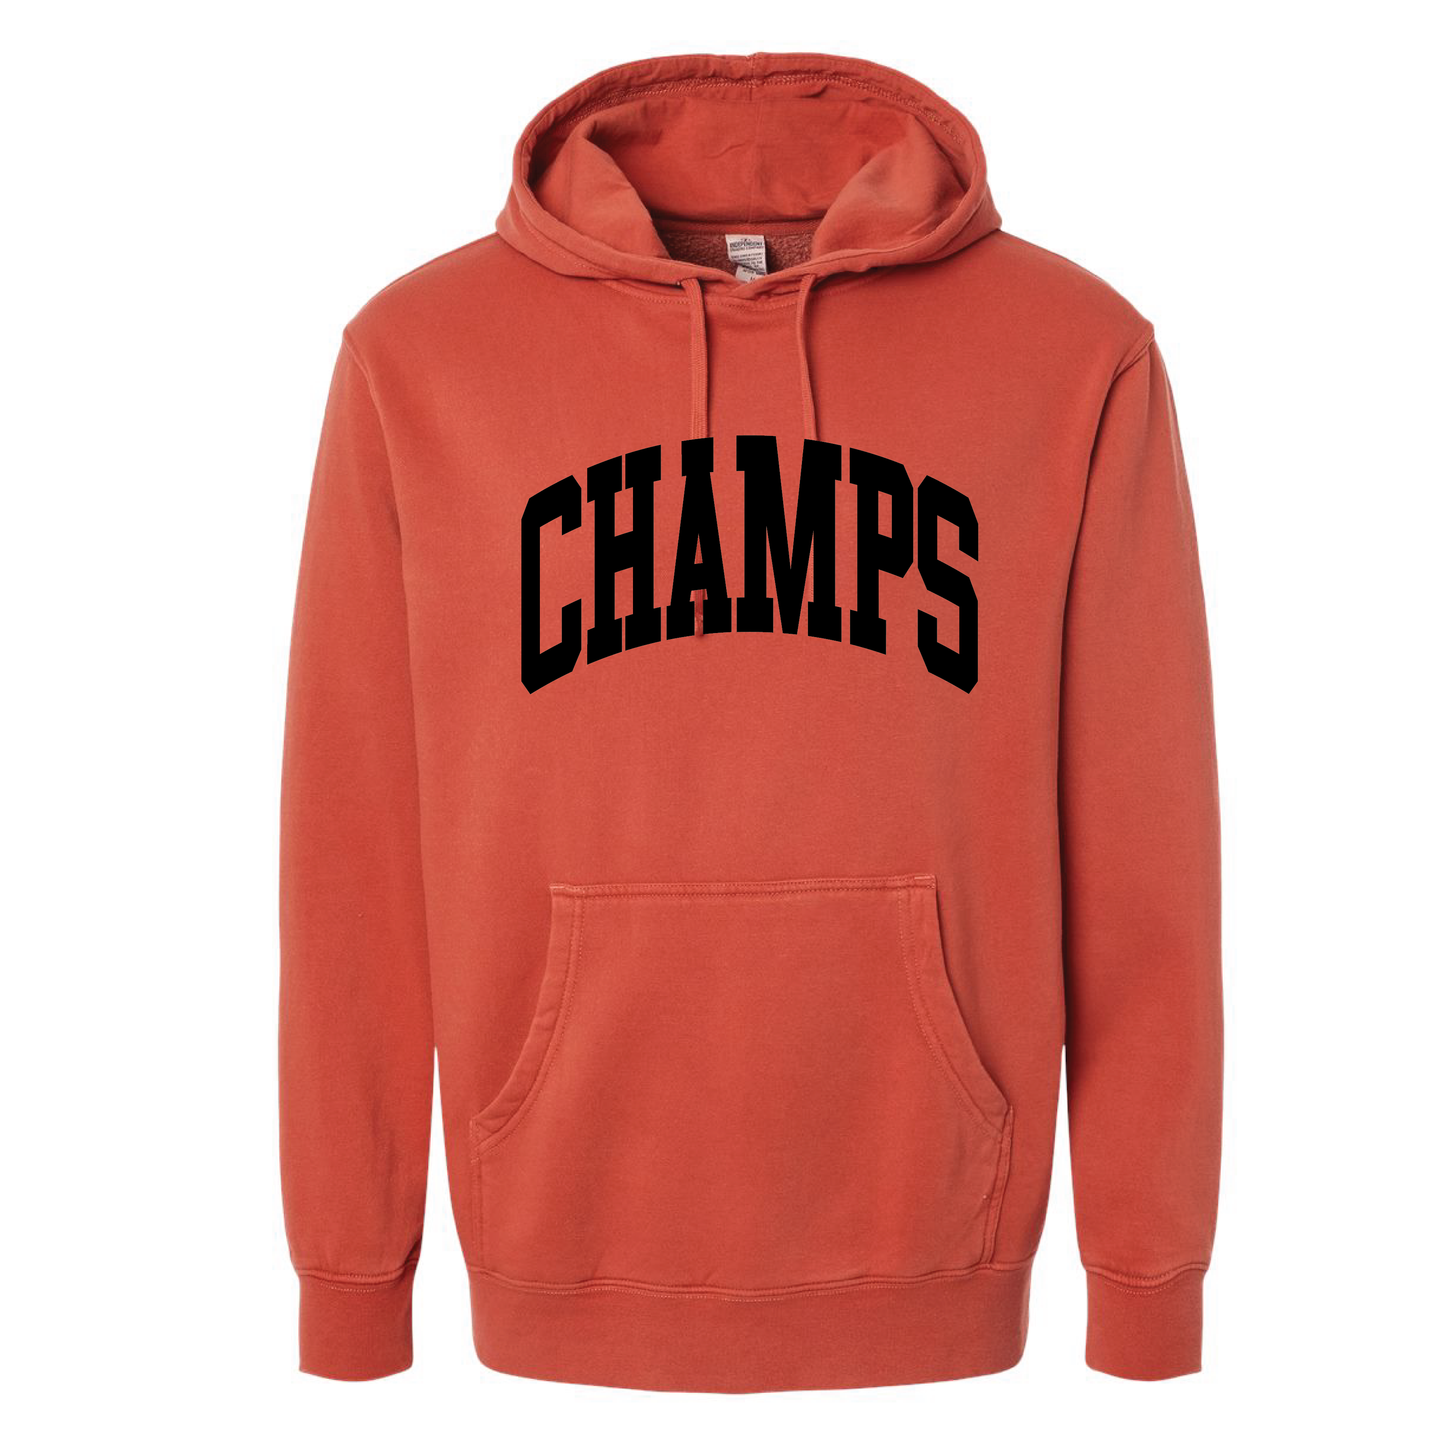 CHAMPS Vintage Hooded Sweatshirt Burnt Orange